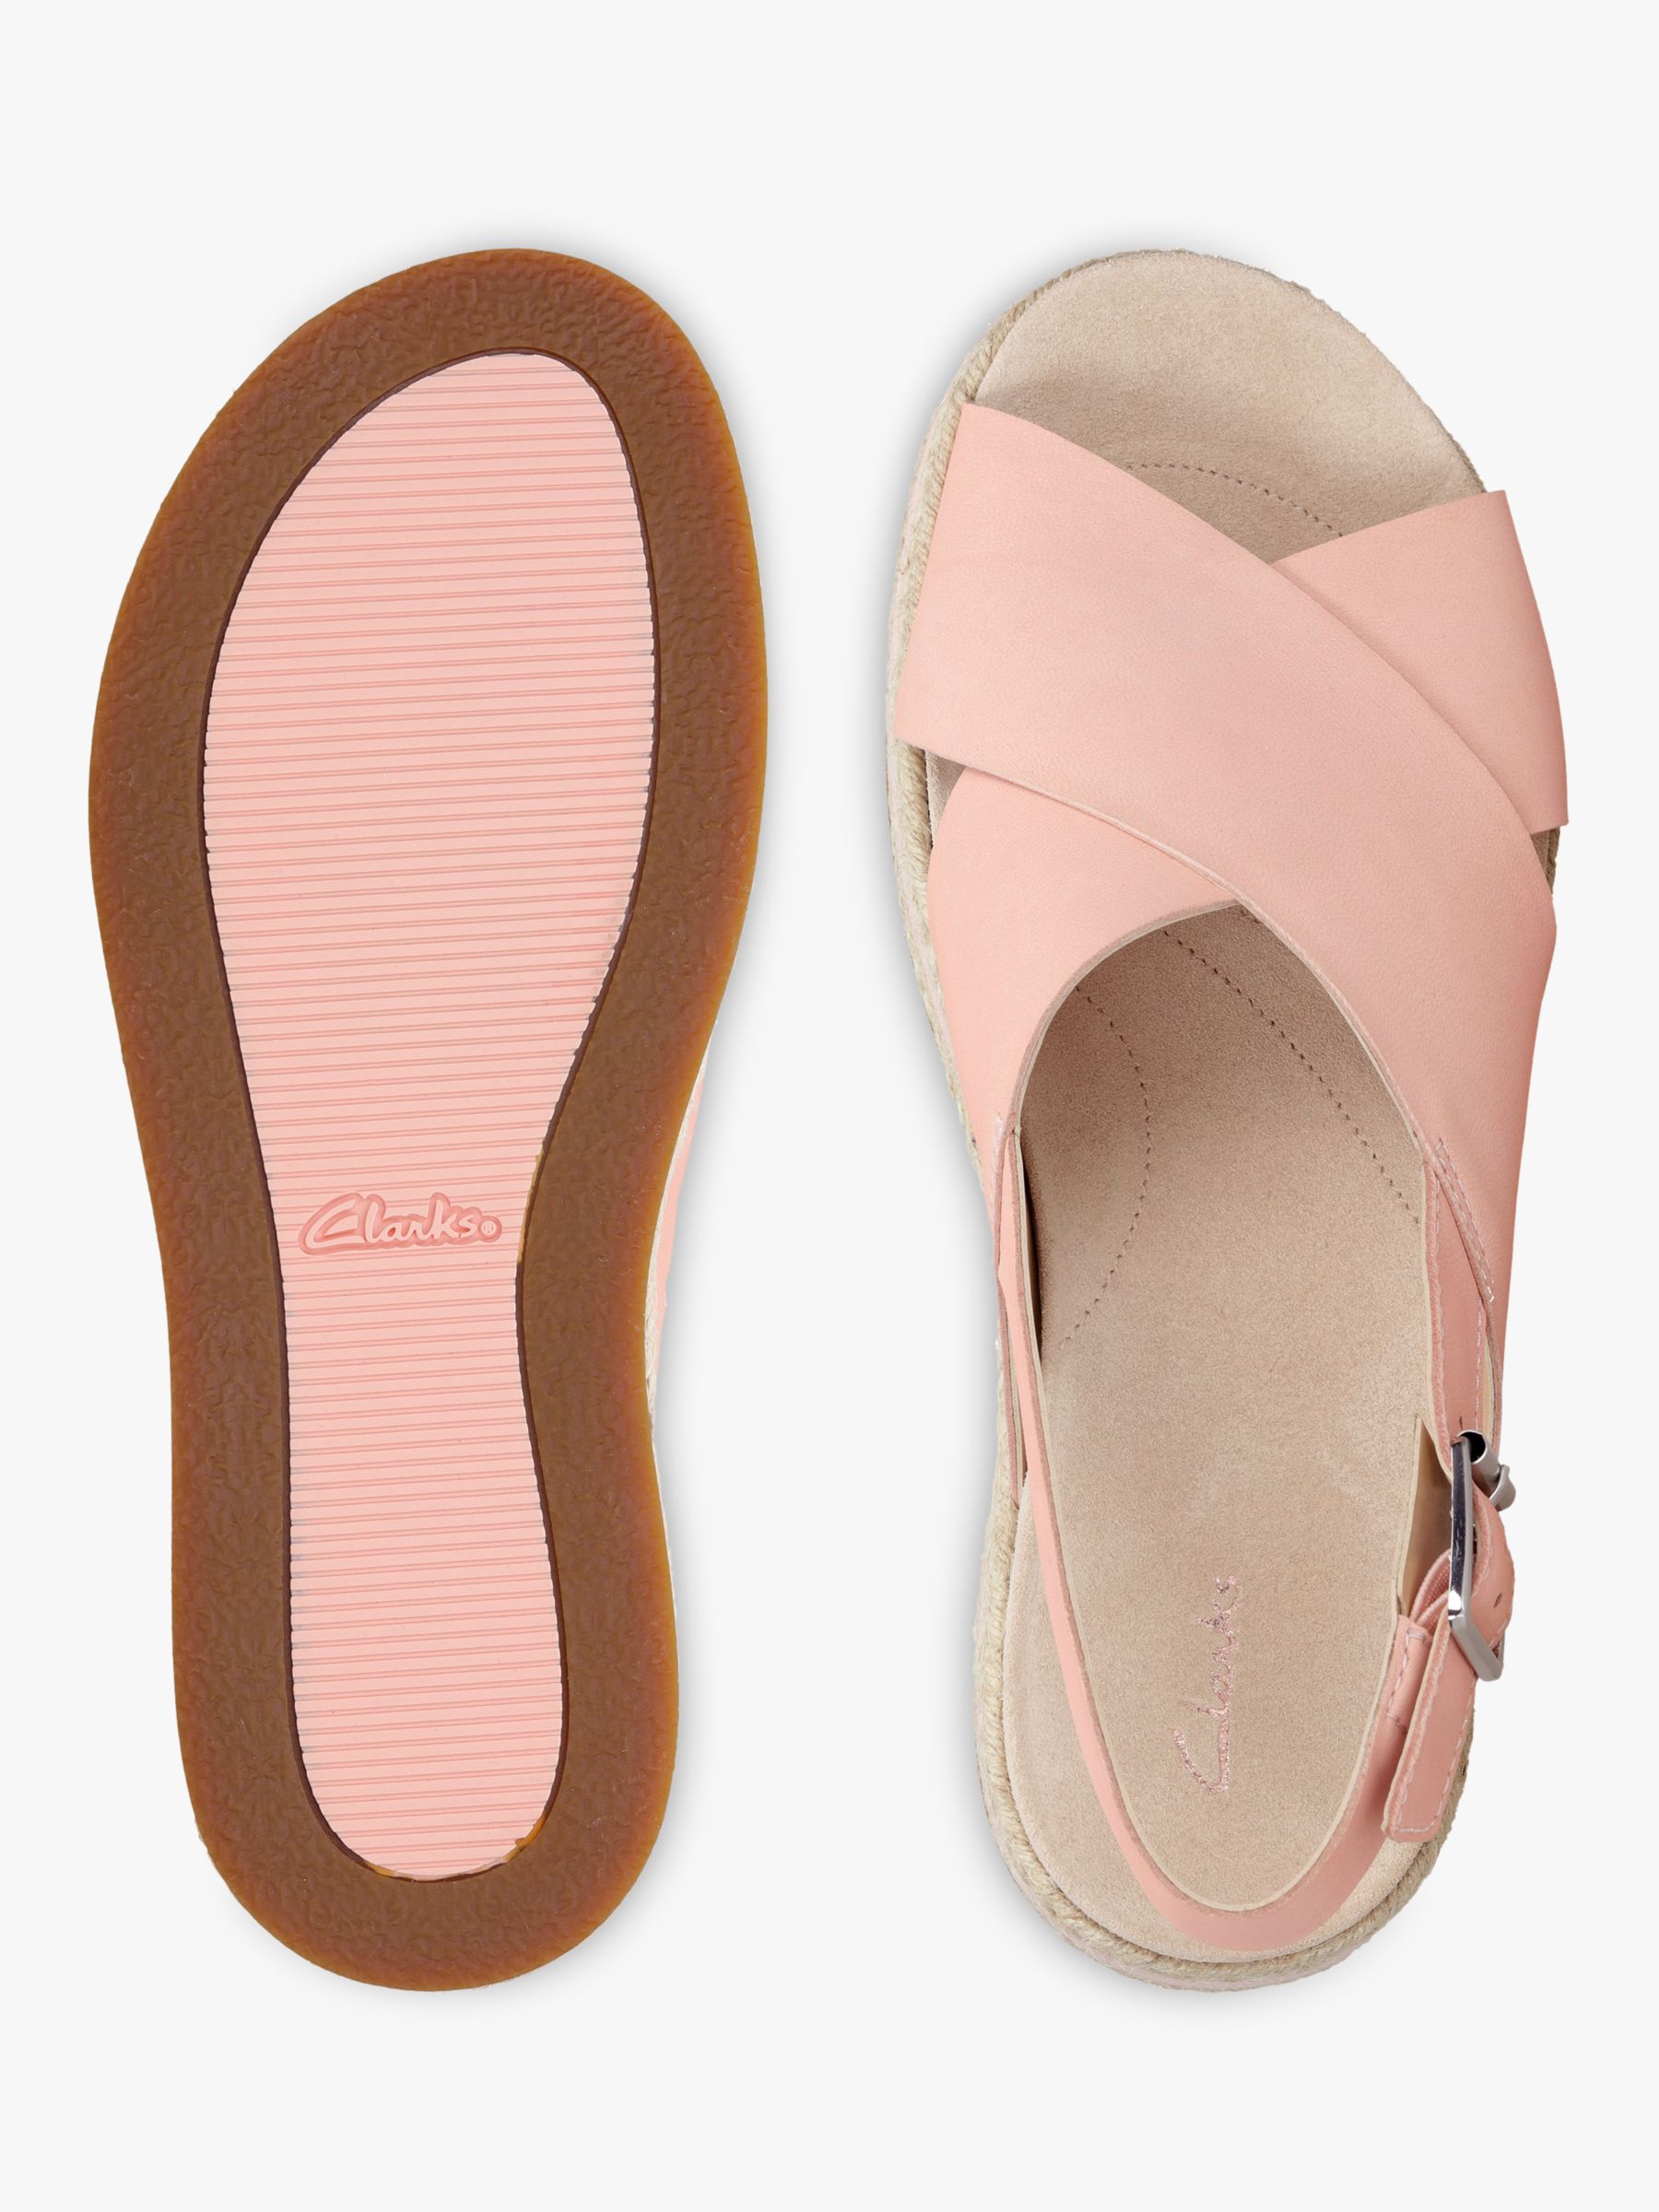 بري جامعة ممتاز clarks pink sandals 